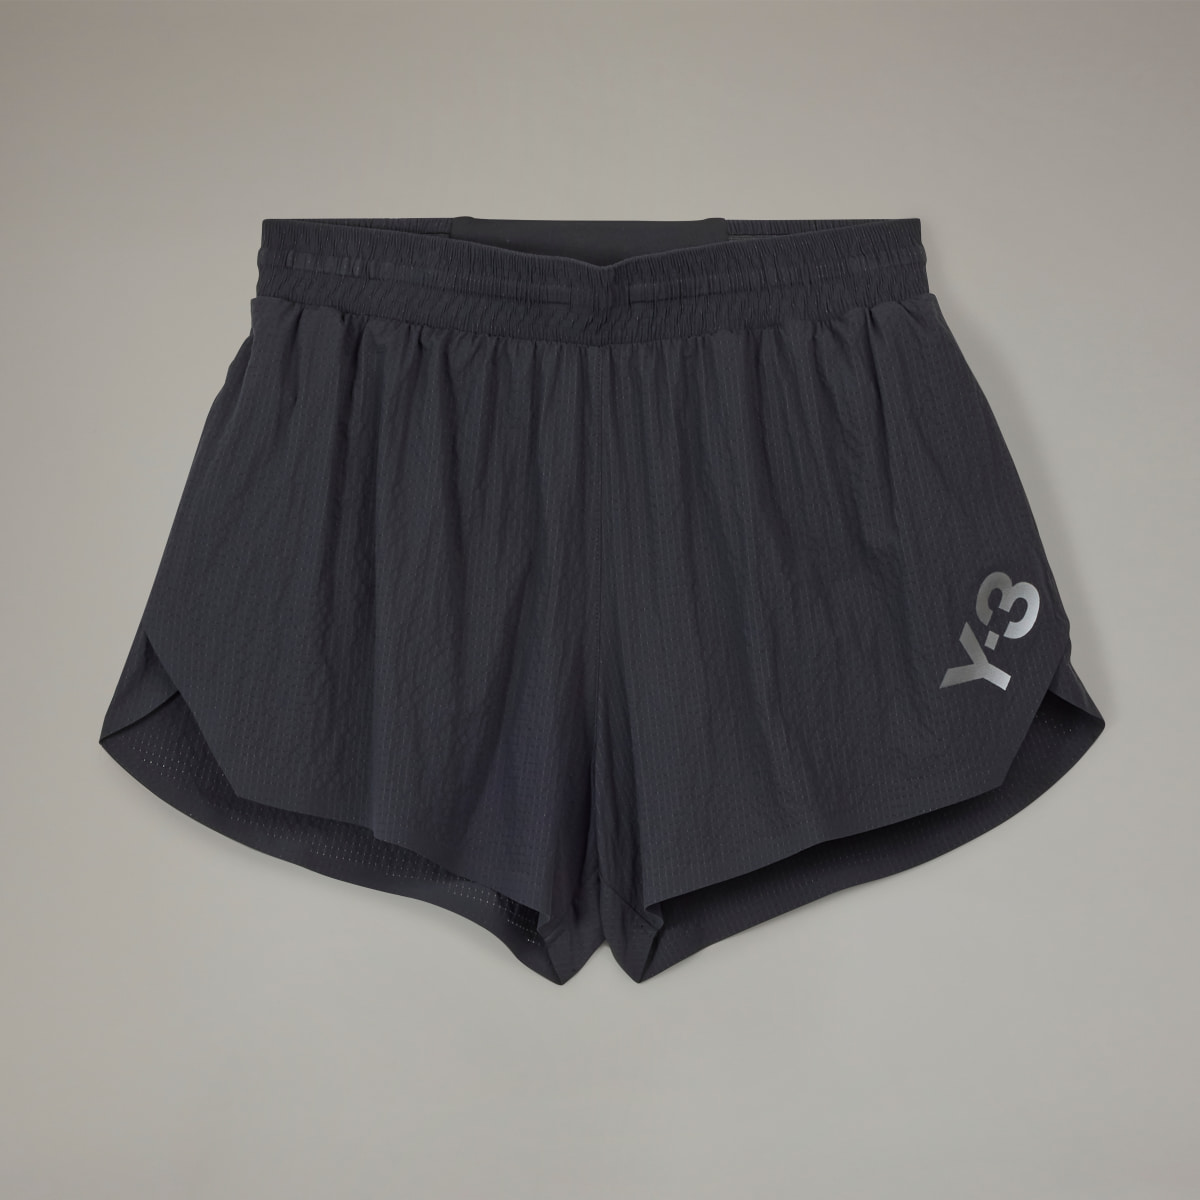 Black Aeroready running shorts, Y-3